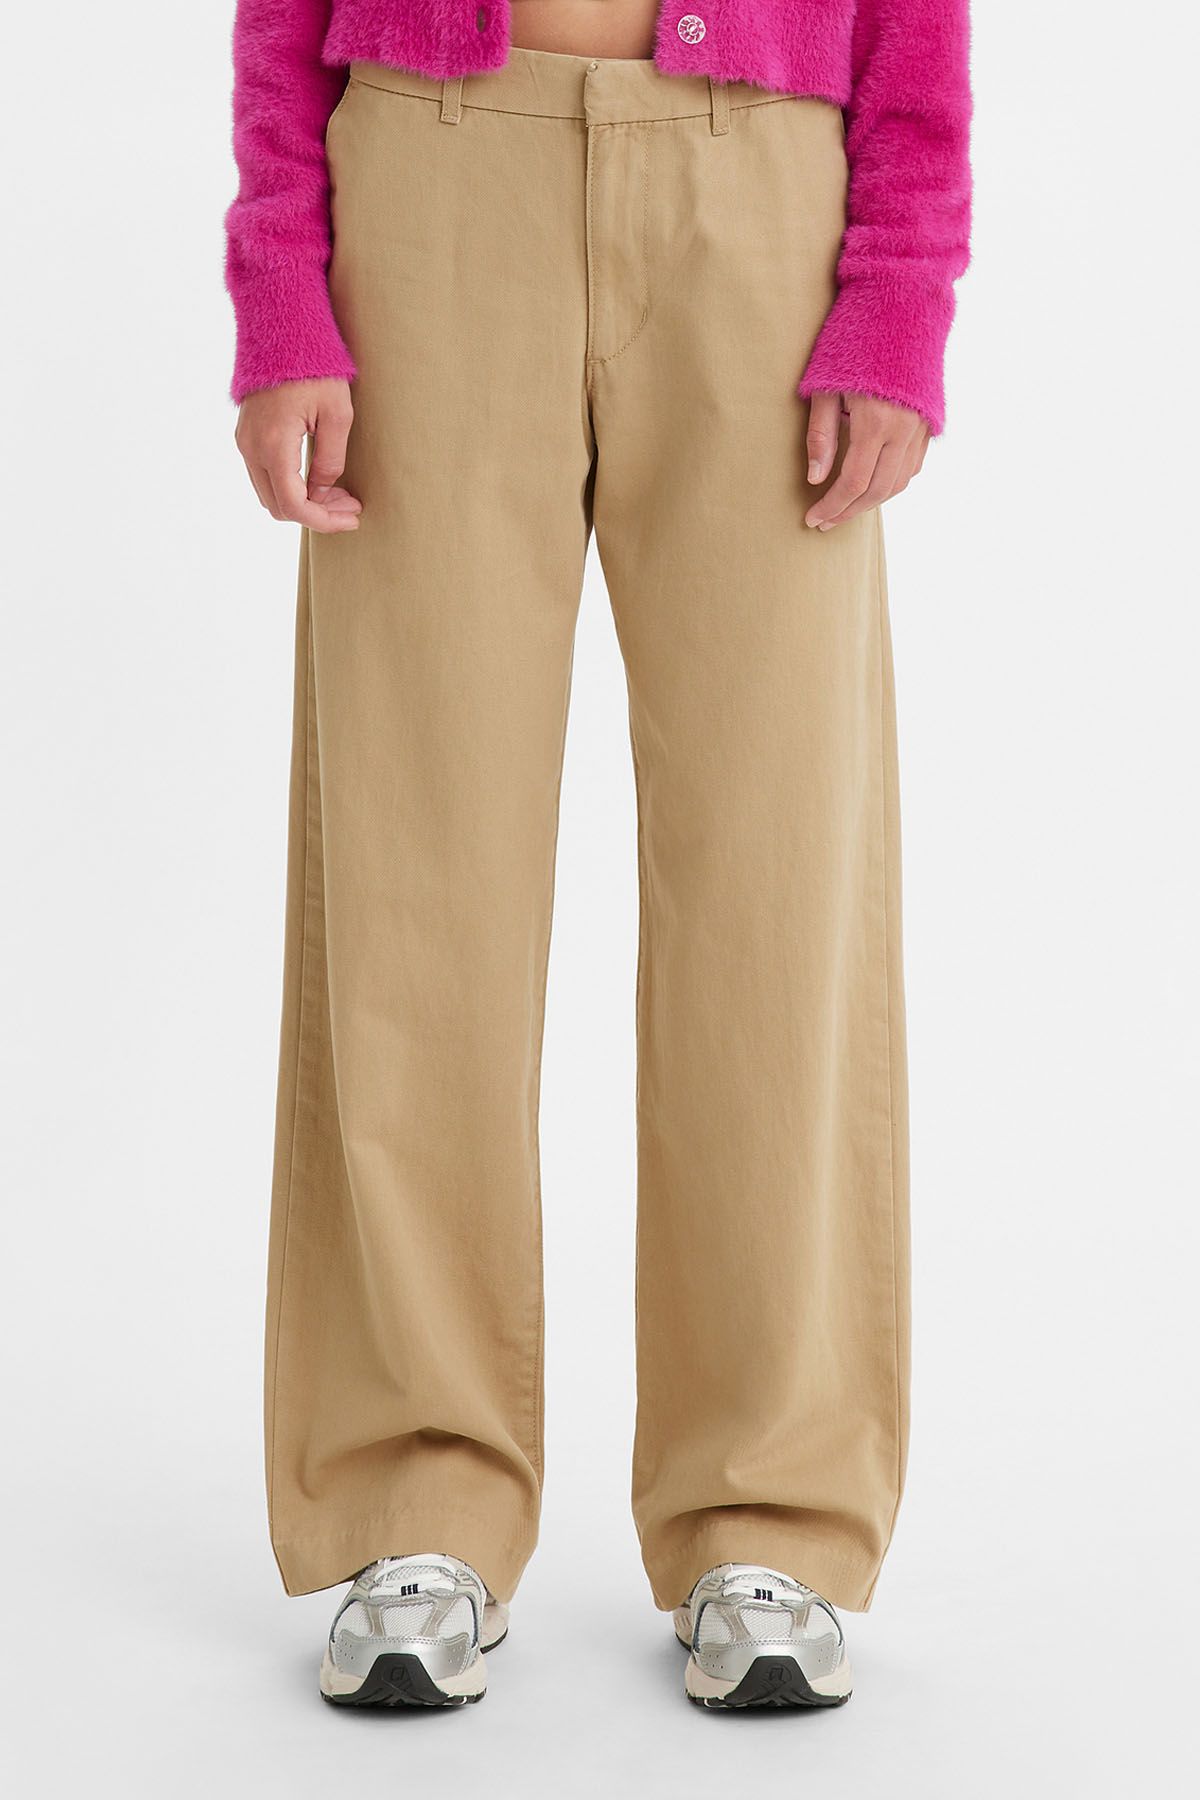 Levi's Women's Baggy Trousers